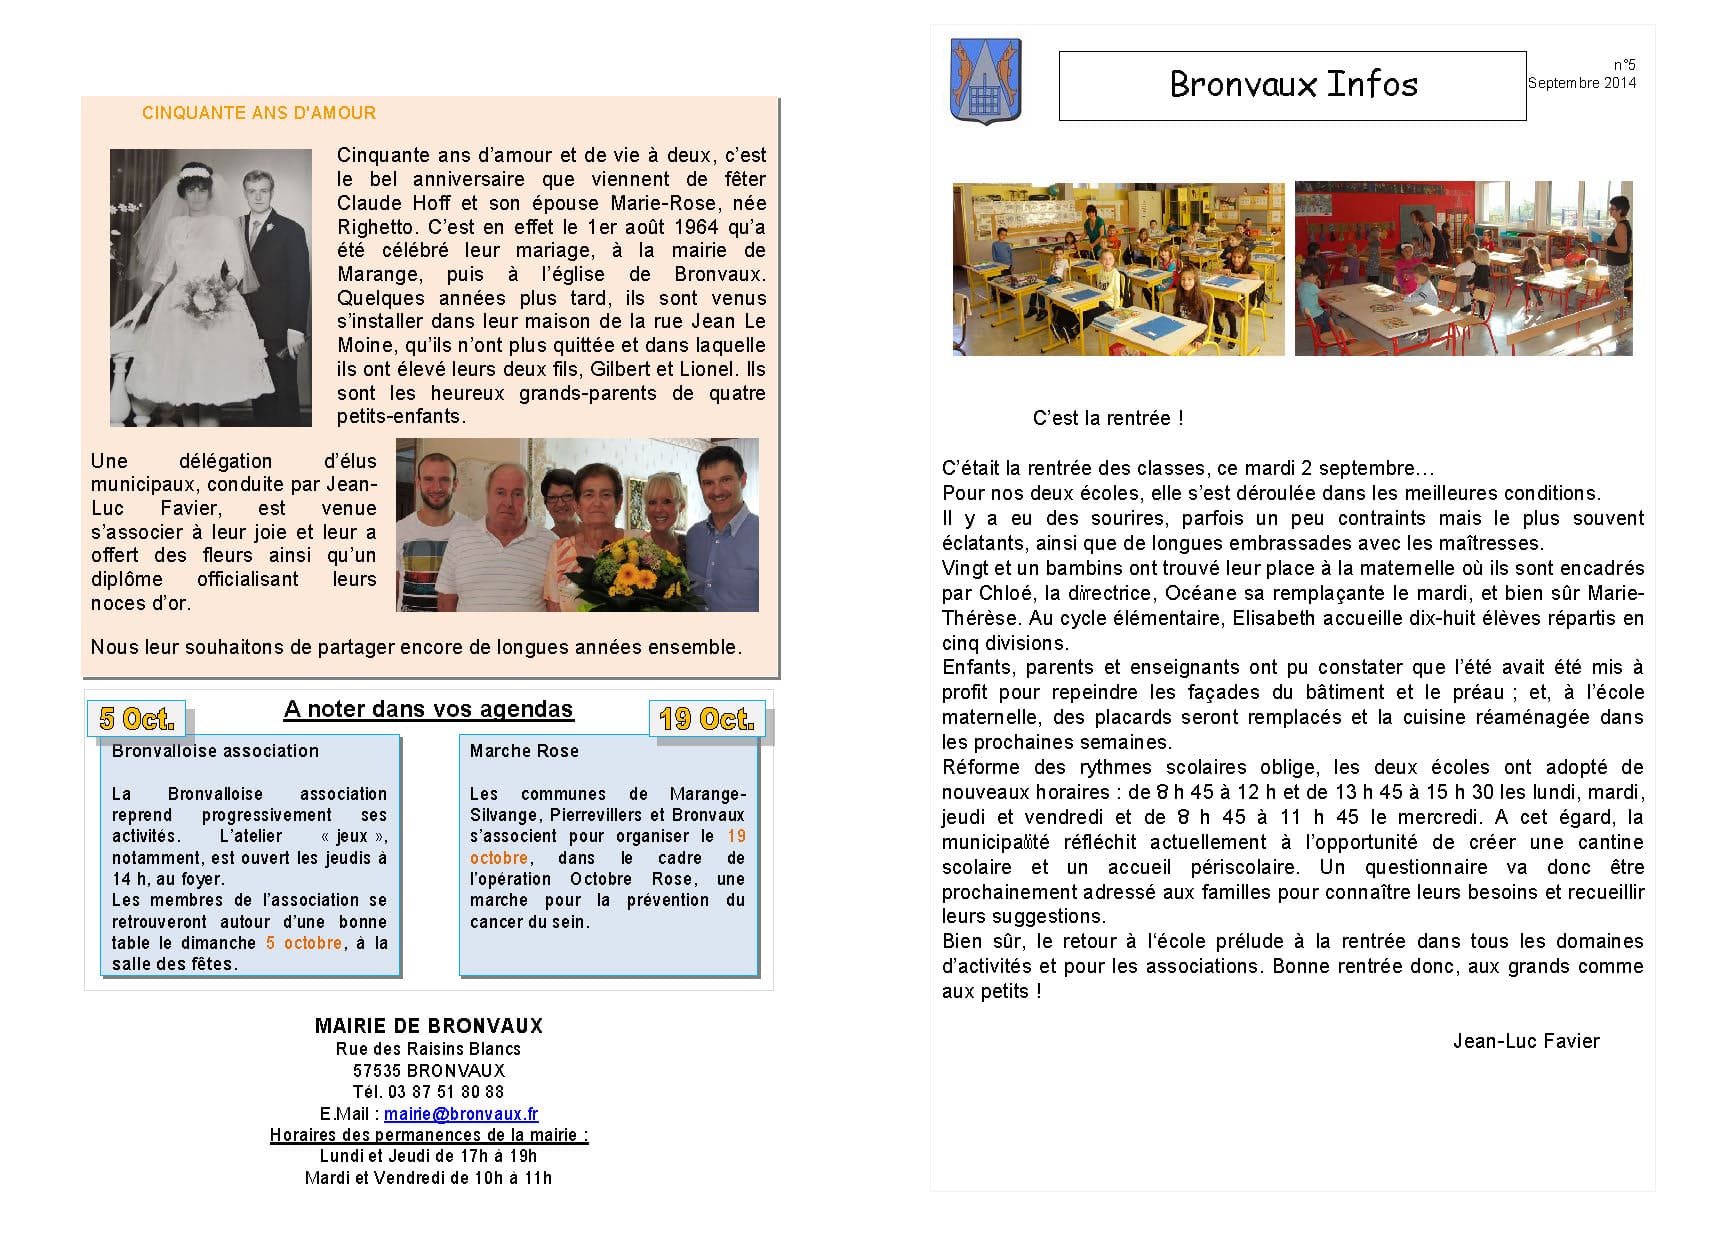 Bronvaux infos septembre 2014